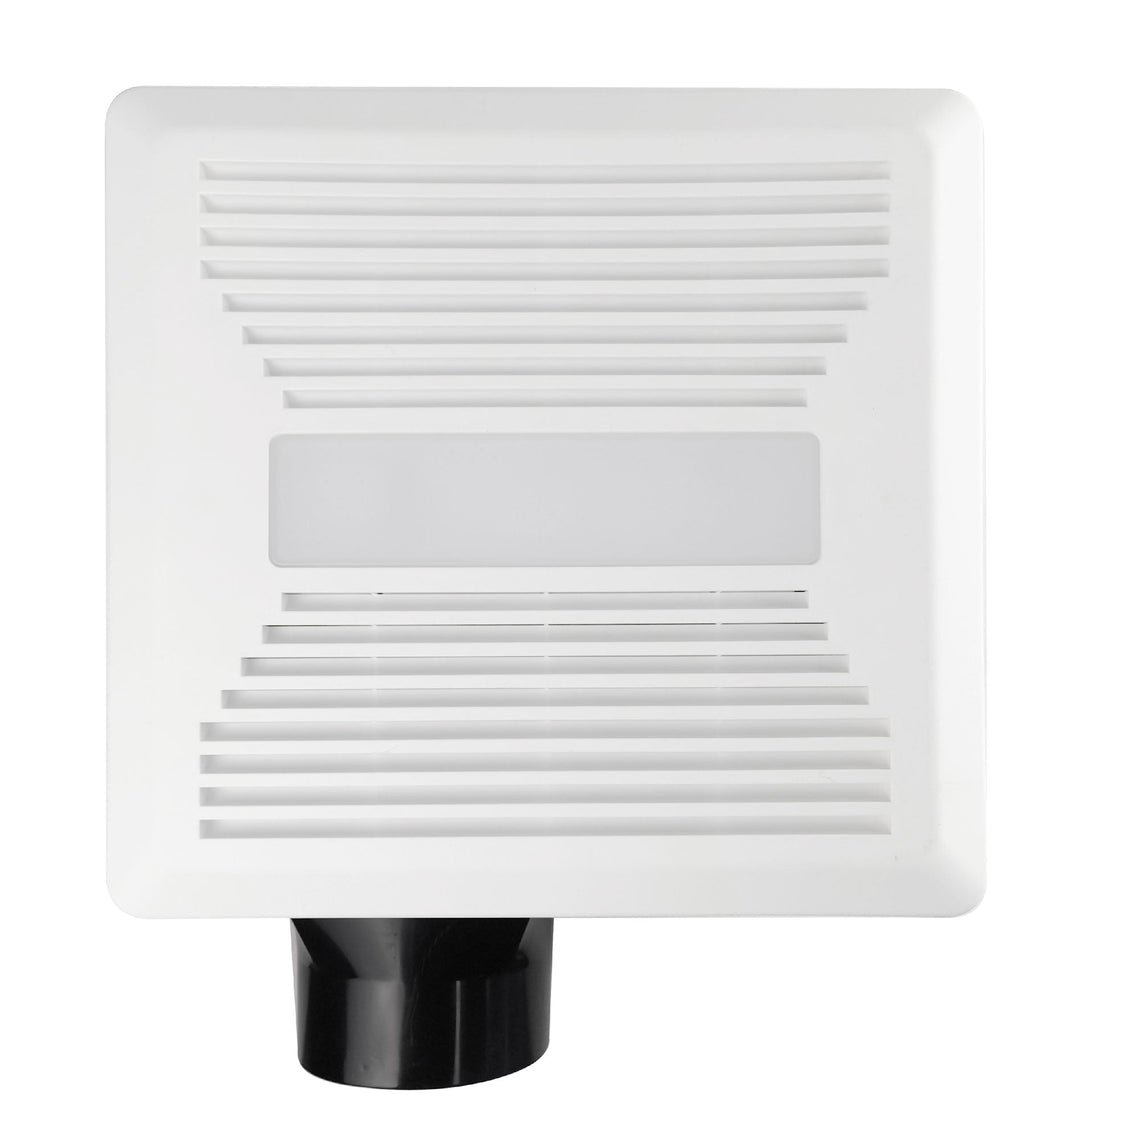 Ultr Quiet Bathroom Exhaust Fan w/ LED Light 4000K, 1000LM, 100 CFM, 0.8 Sones, Ceiling/Wall Mounted